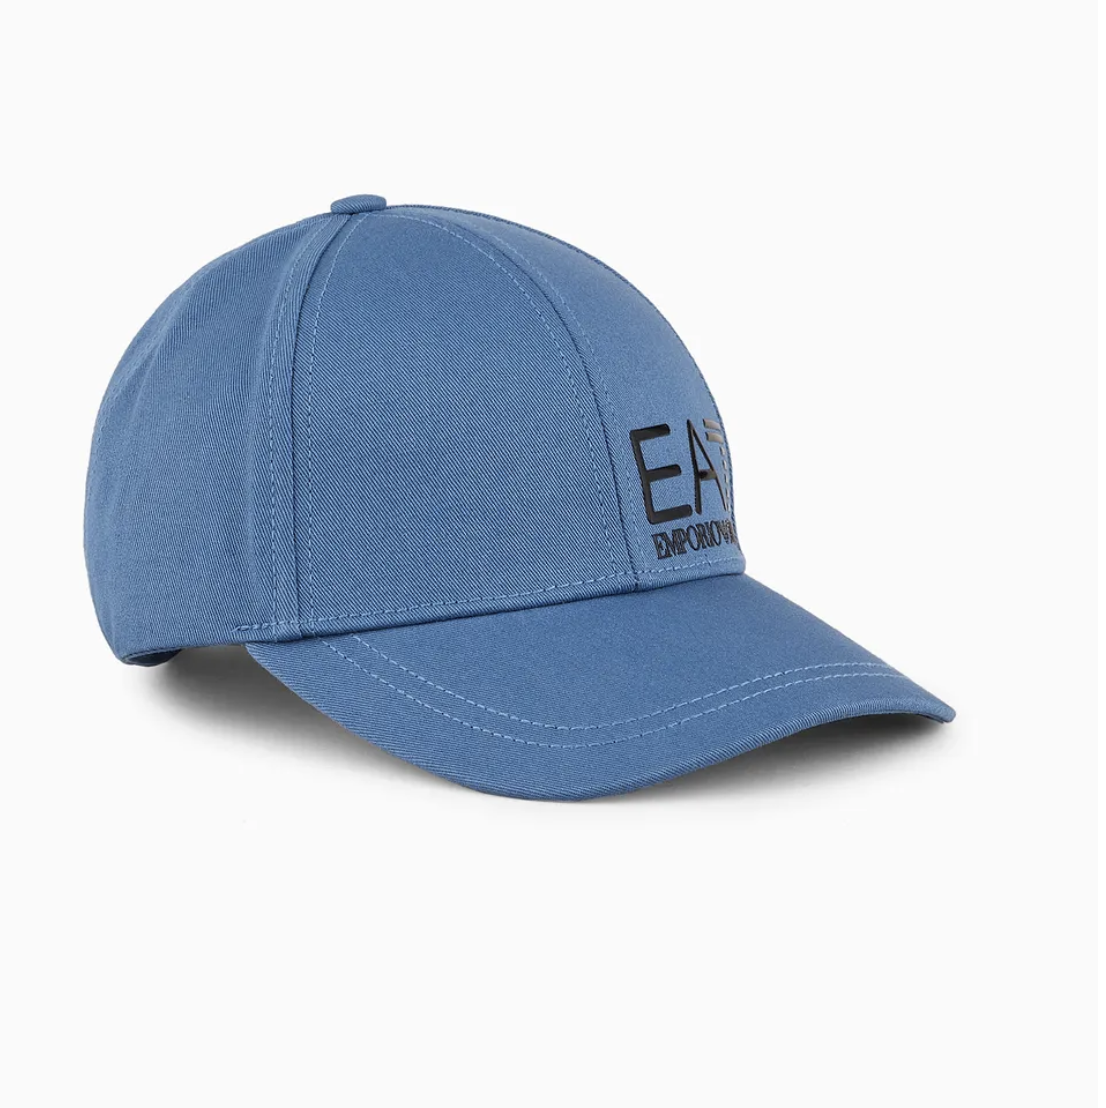 EA7 By Emporio Armani Baseball Cap Blue